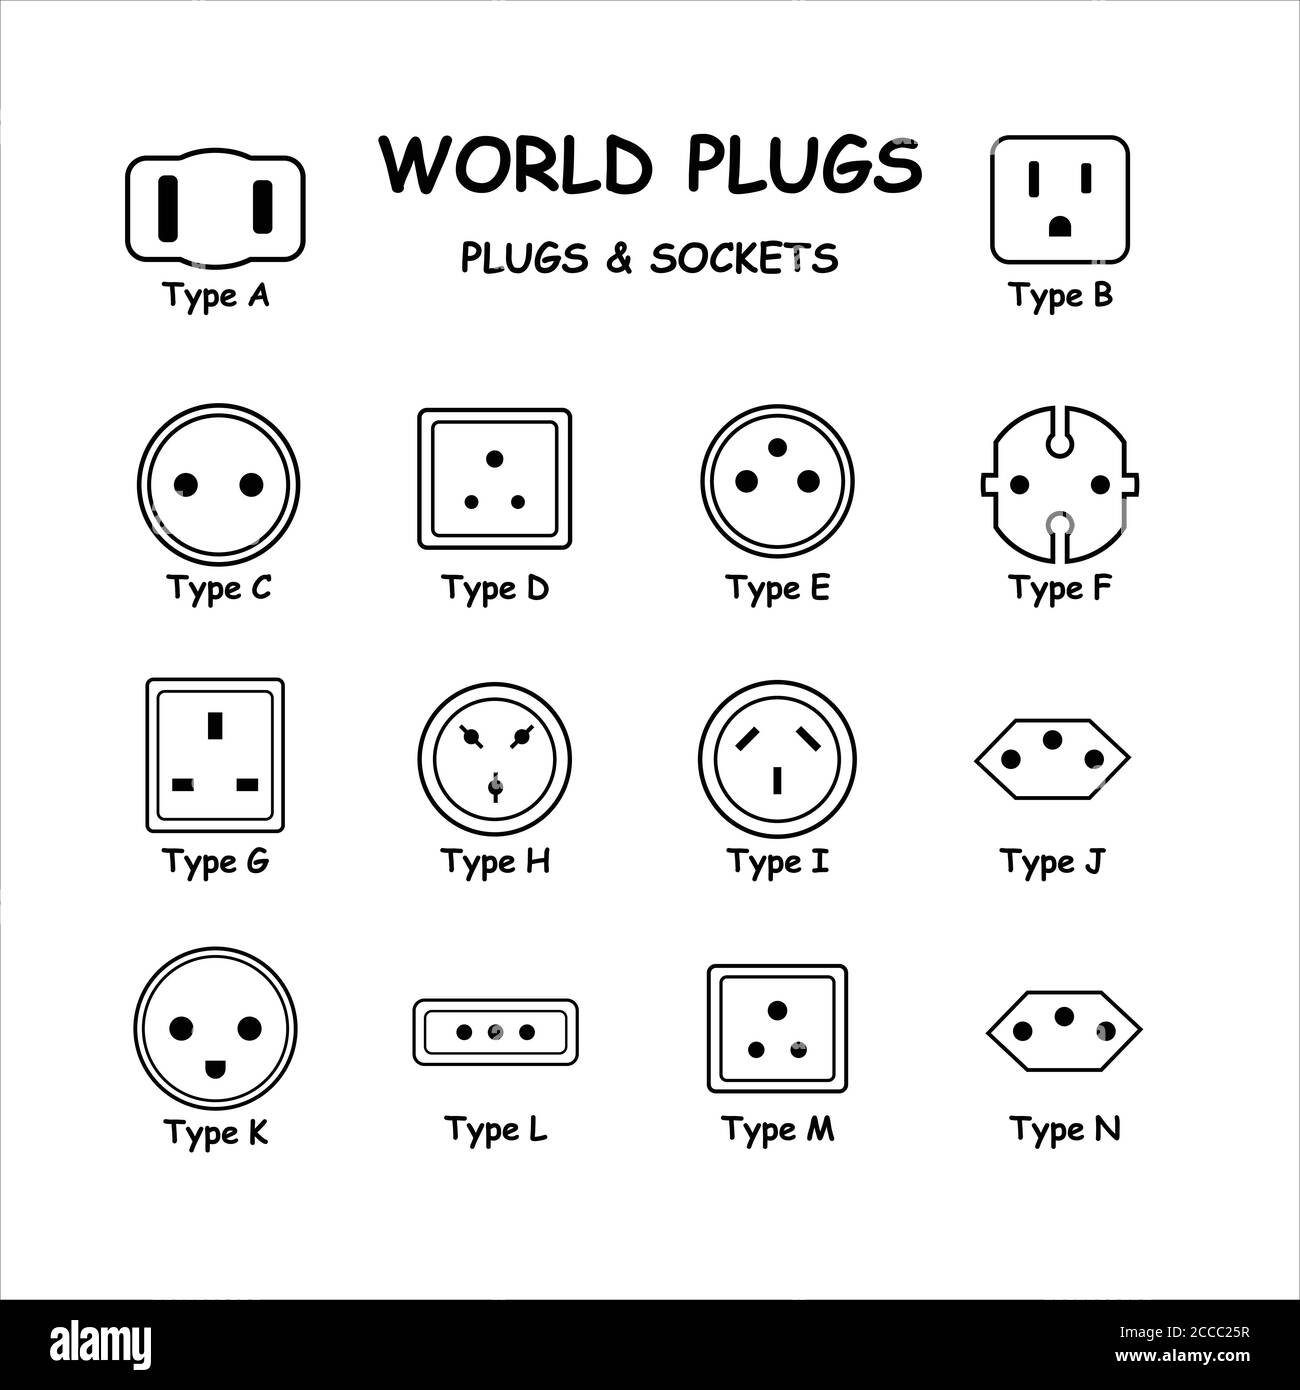 International World Plugs and Sockets Types Diagram Set. Vector Diagram